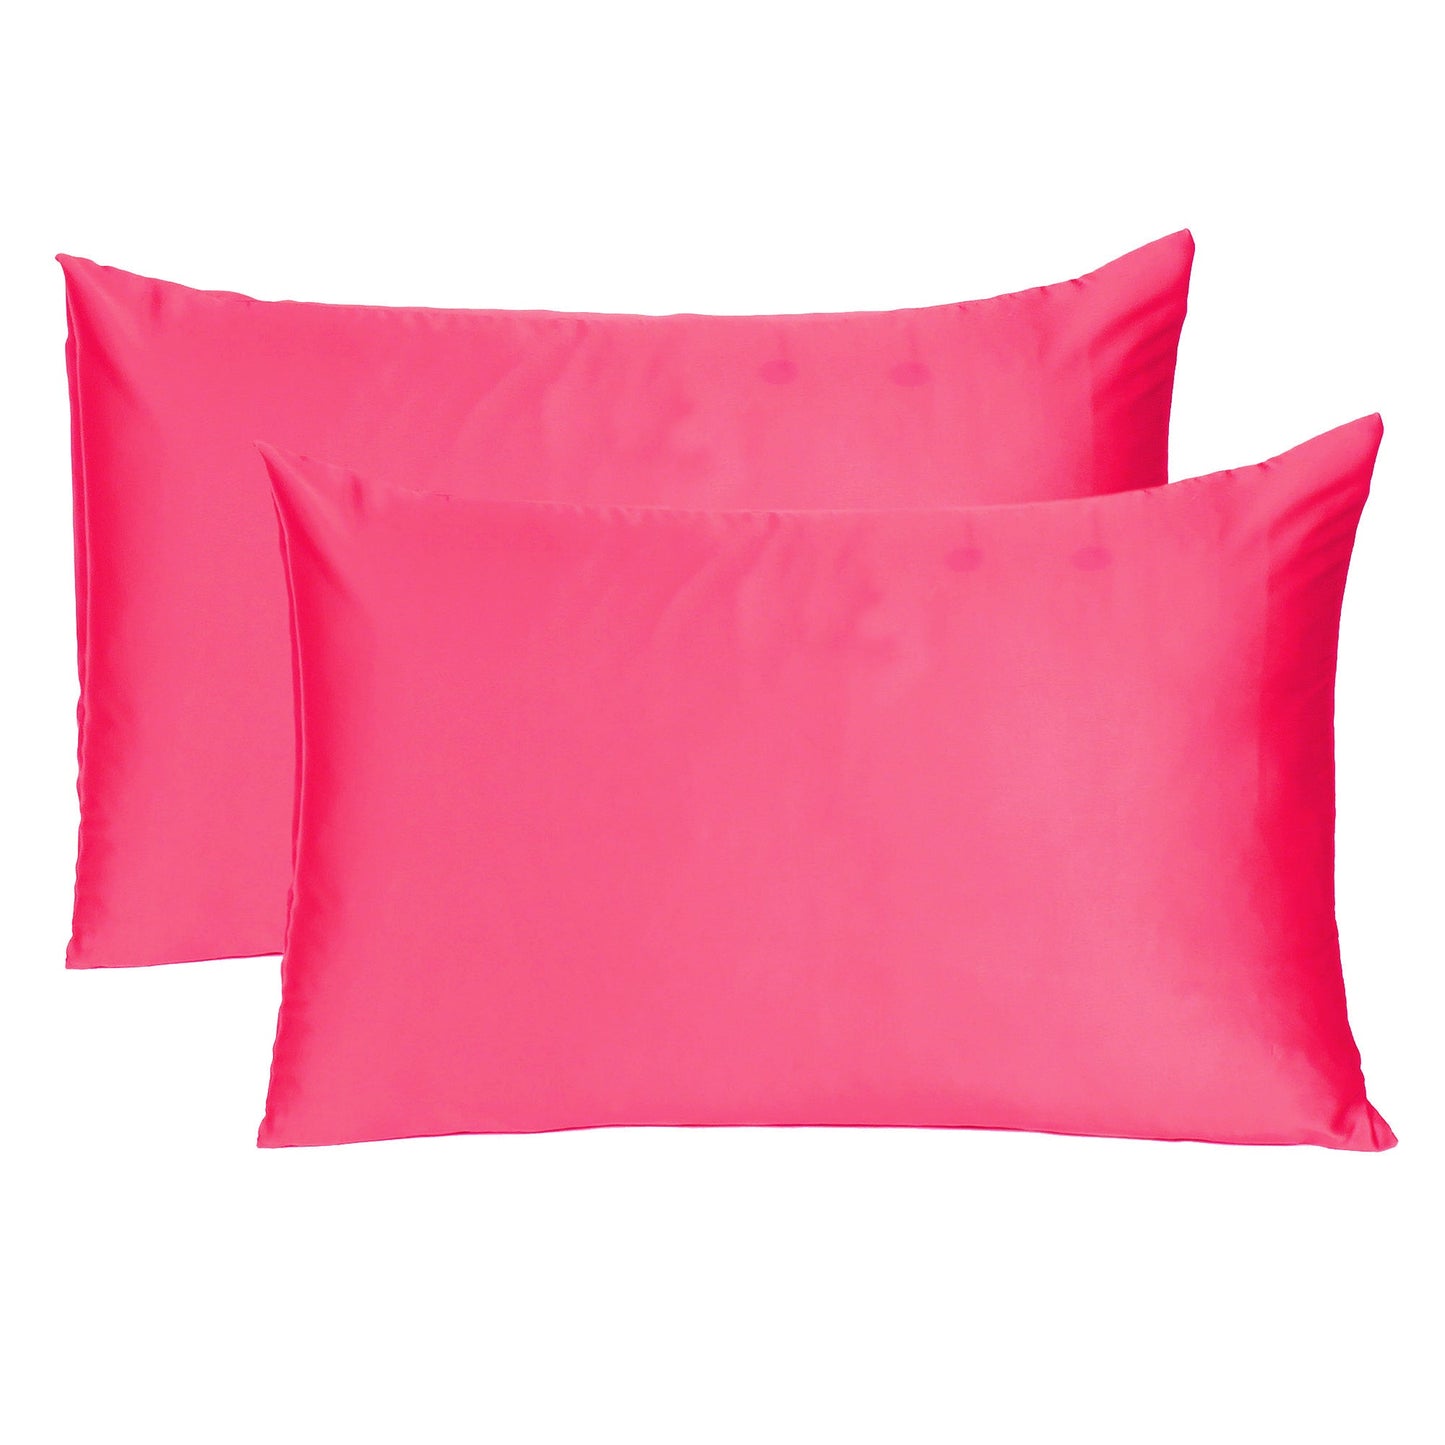 Luxury Soft Plain Satin Silk Pillowcases in Set of 2 - Raspberry